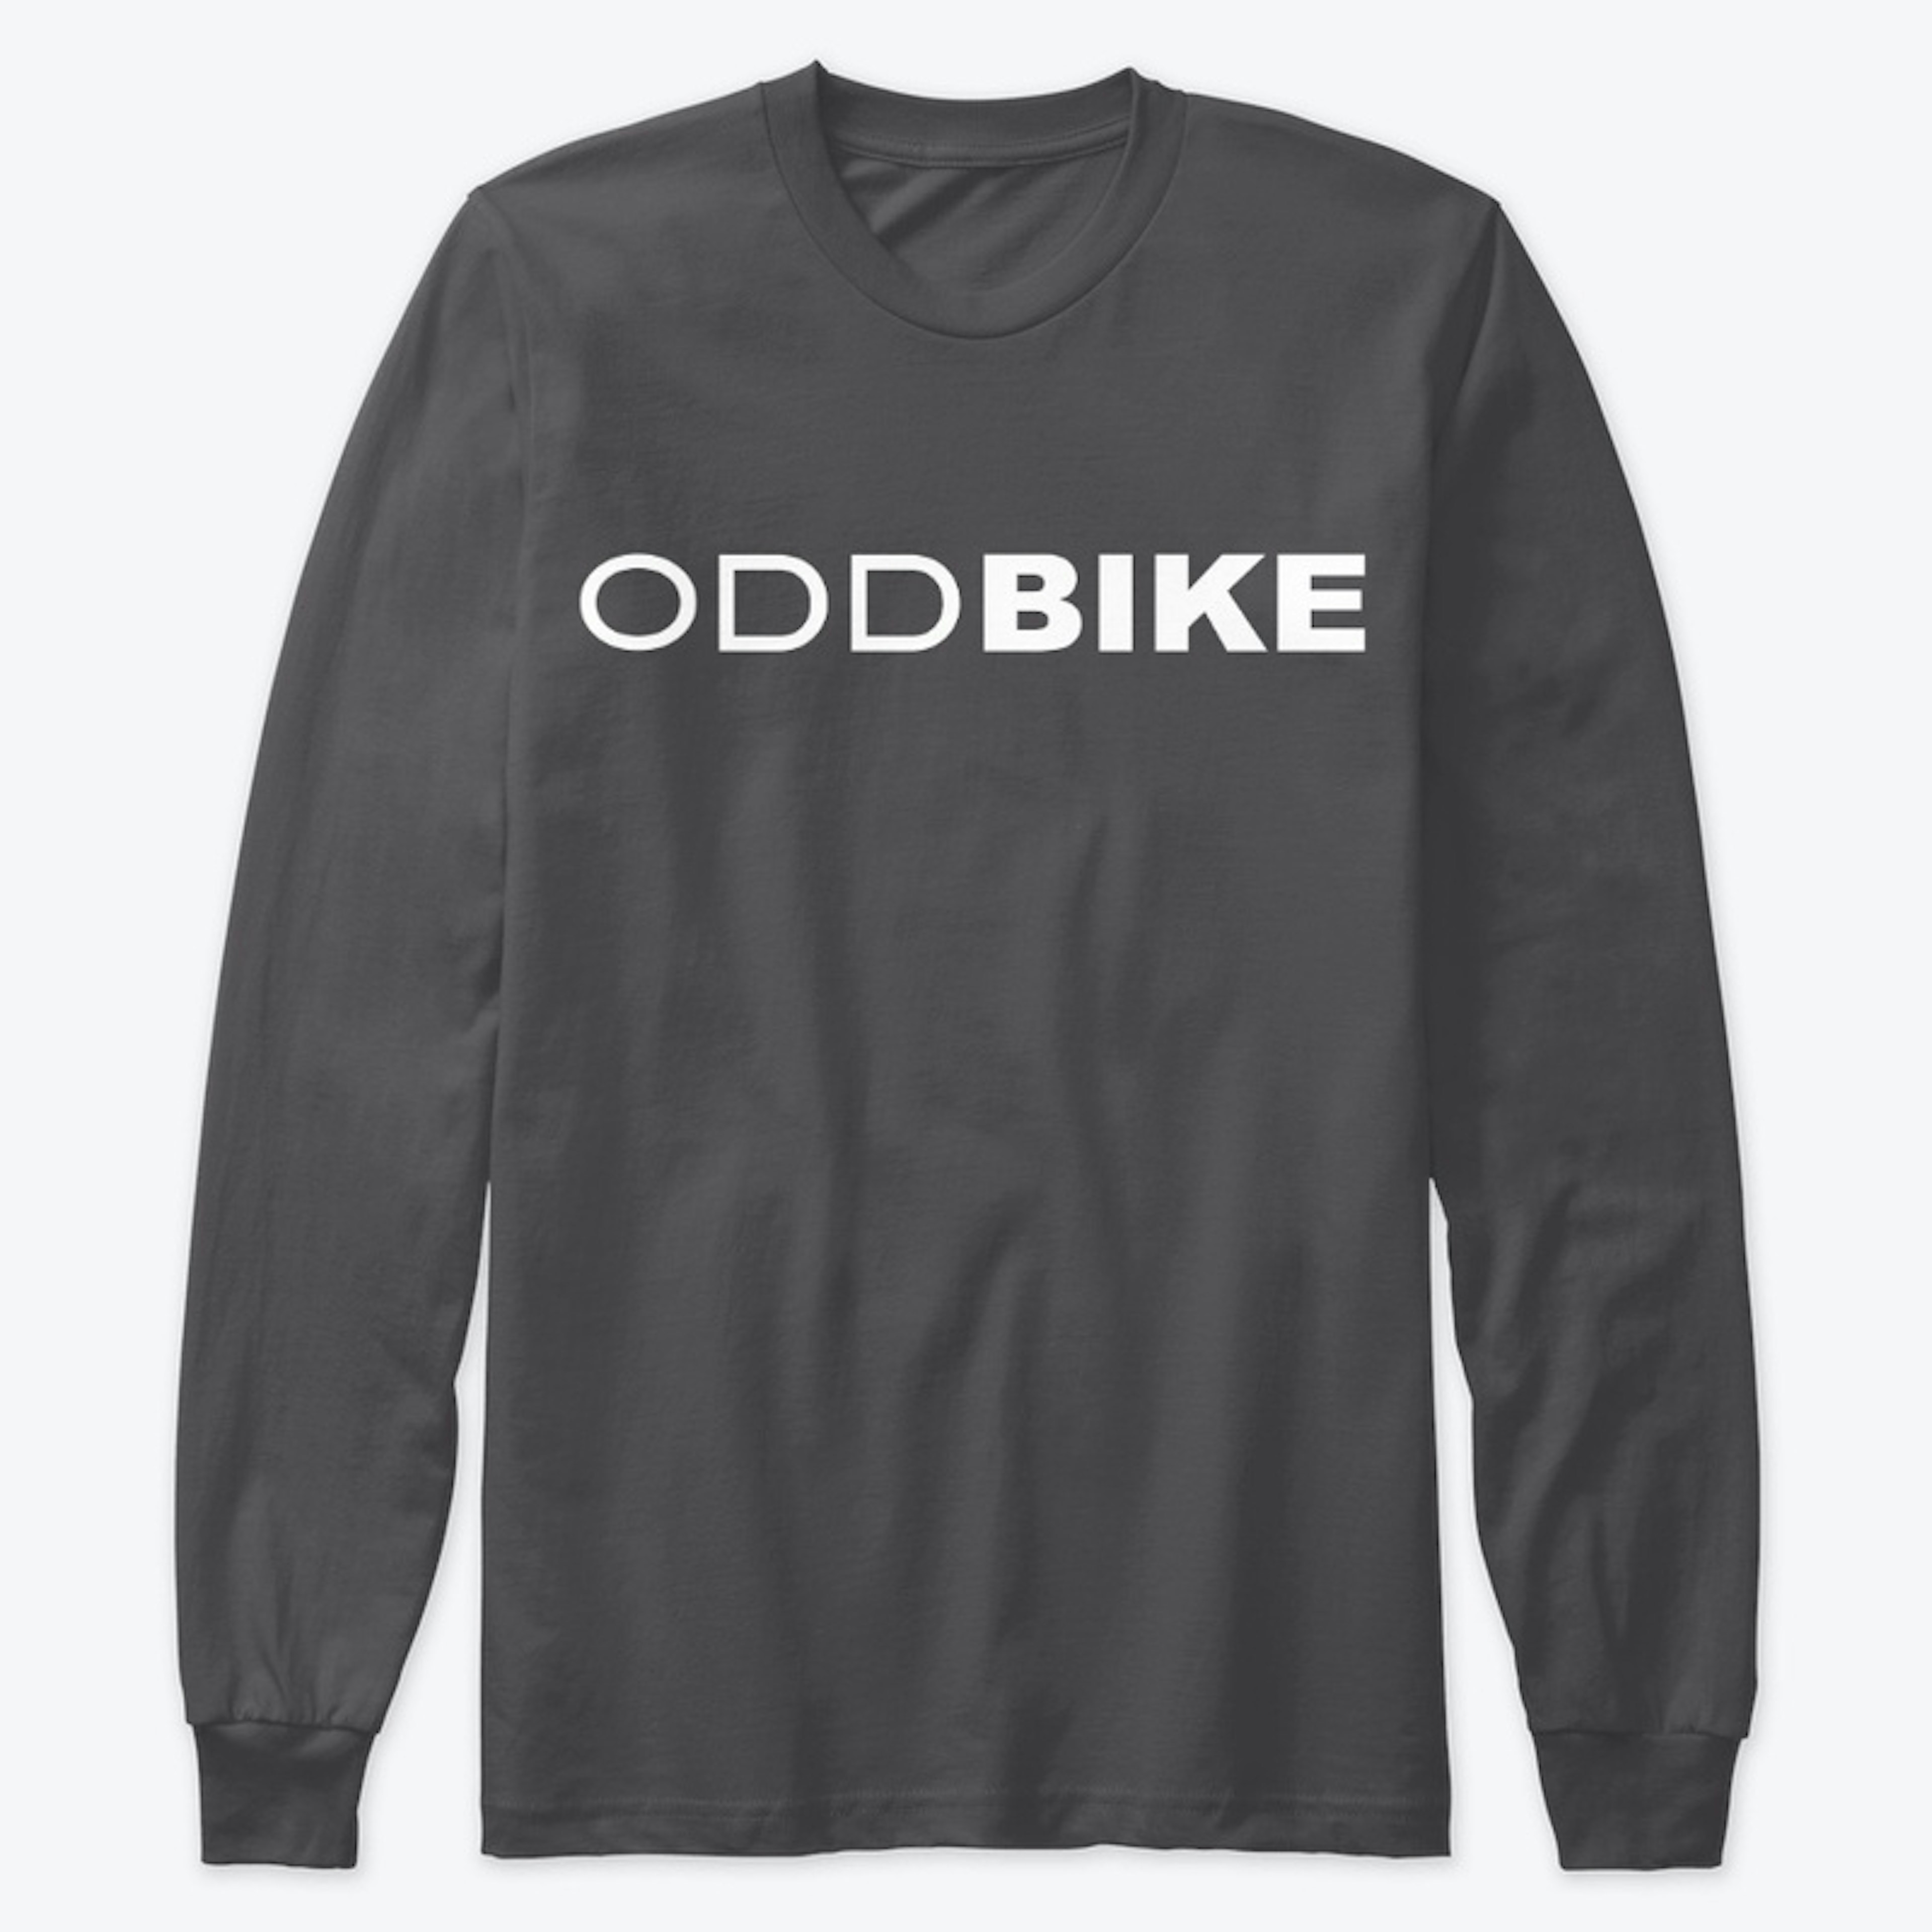 OddBike Longsleeve T-Shirt